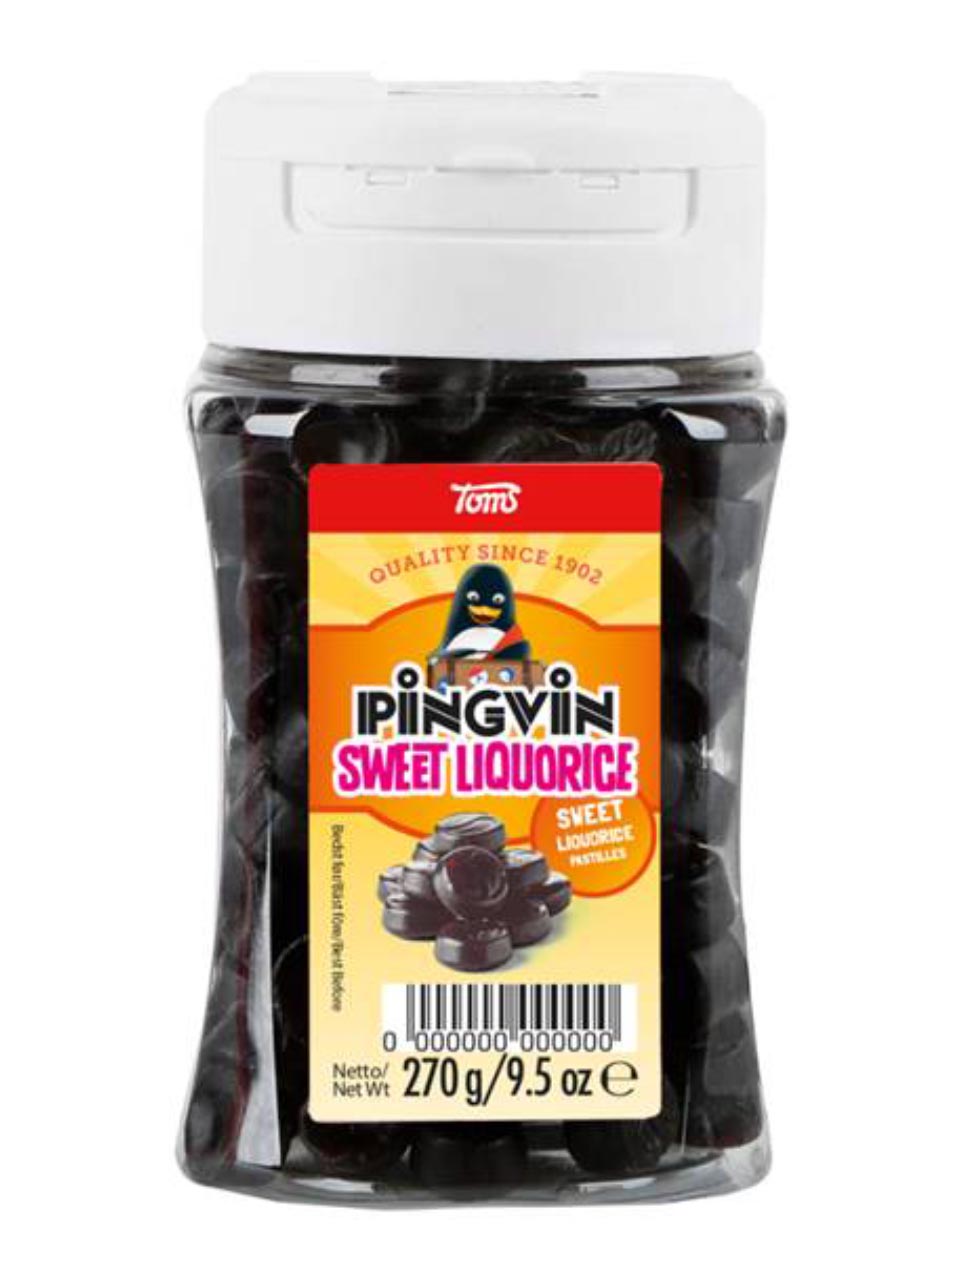 Pingvin Sweet Liquorice 270g null - onesize - 1